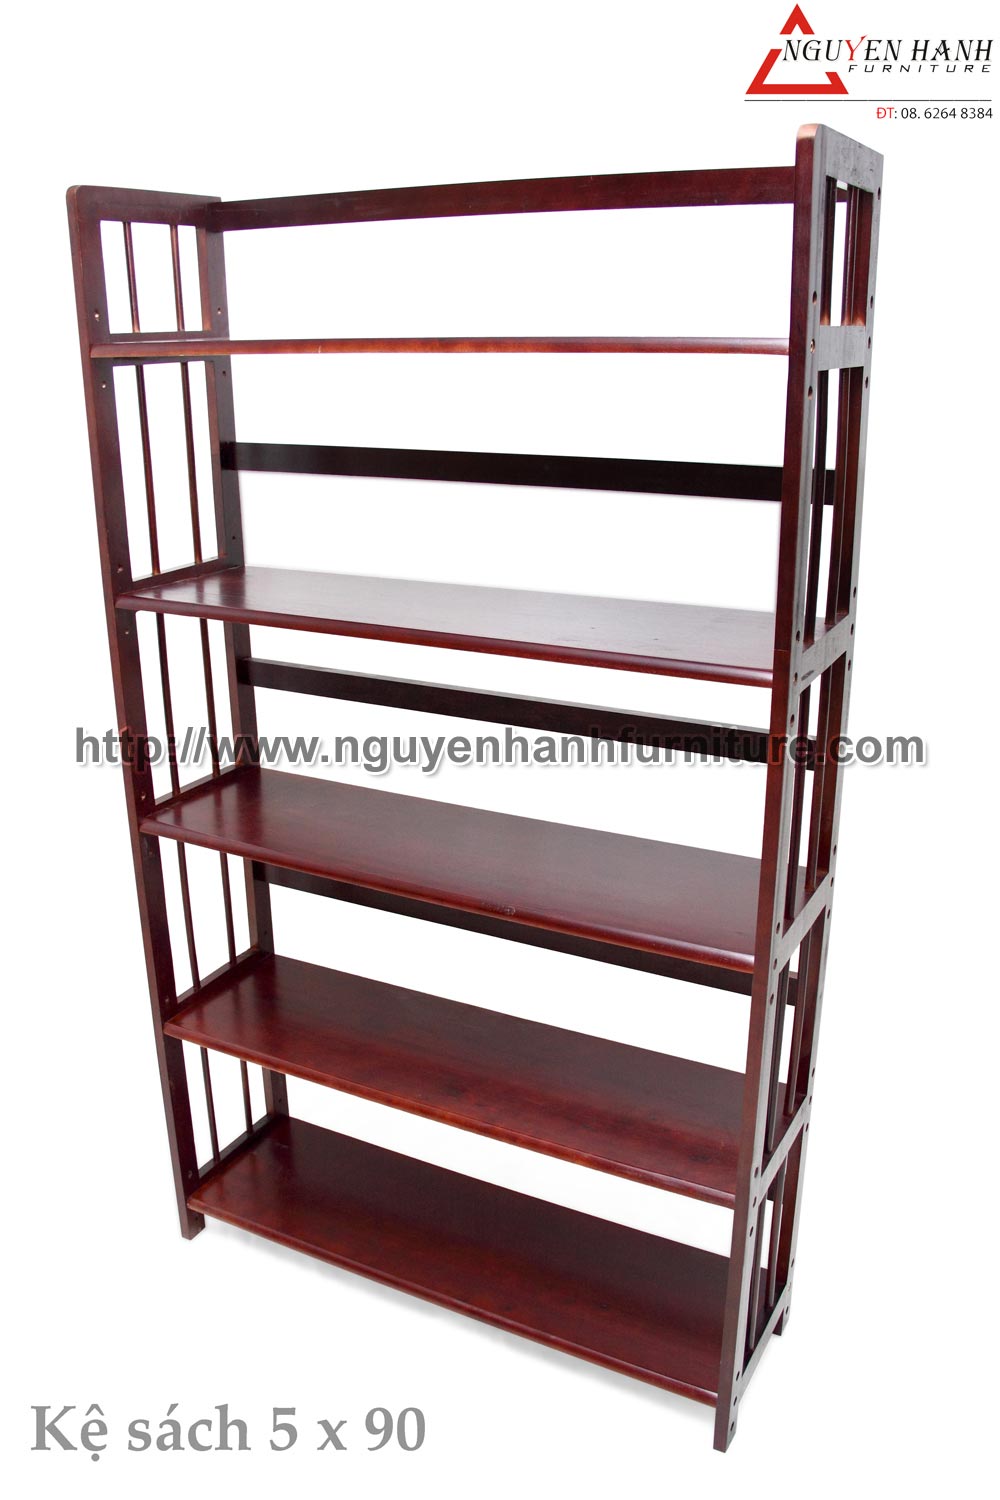 Name product: 5 storey Adjustable Bookshelf 90 